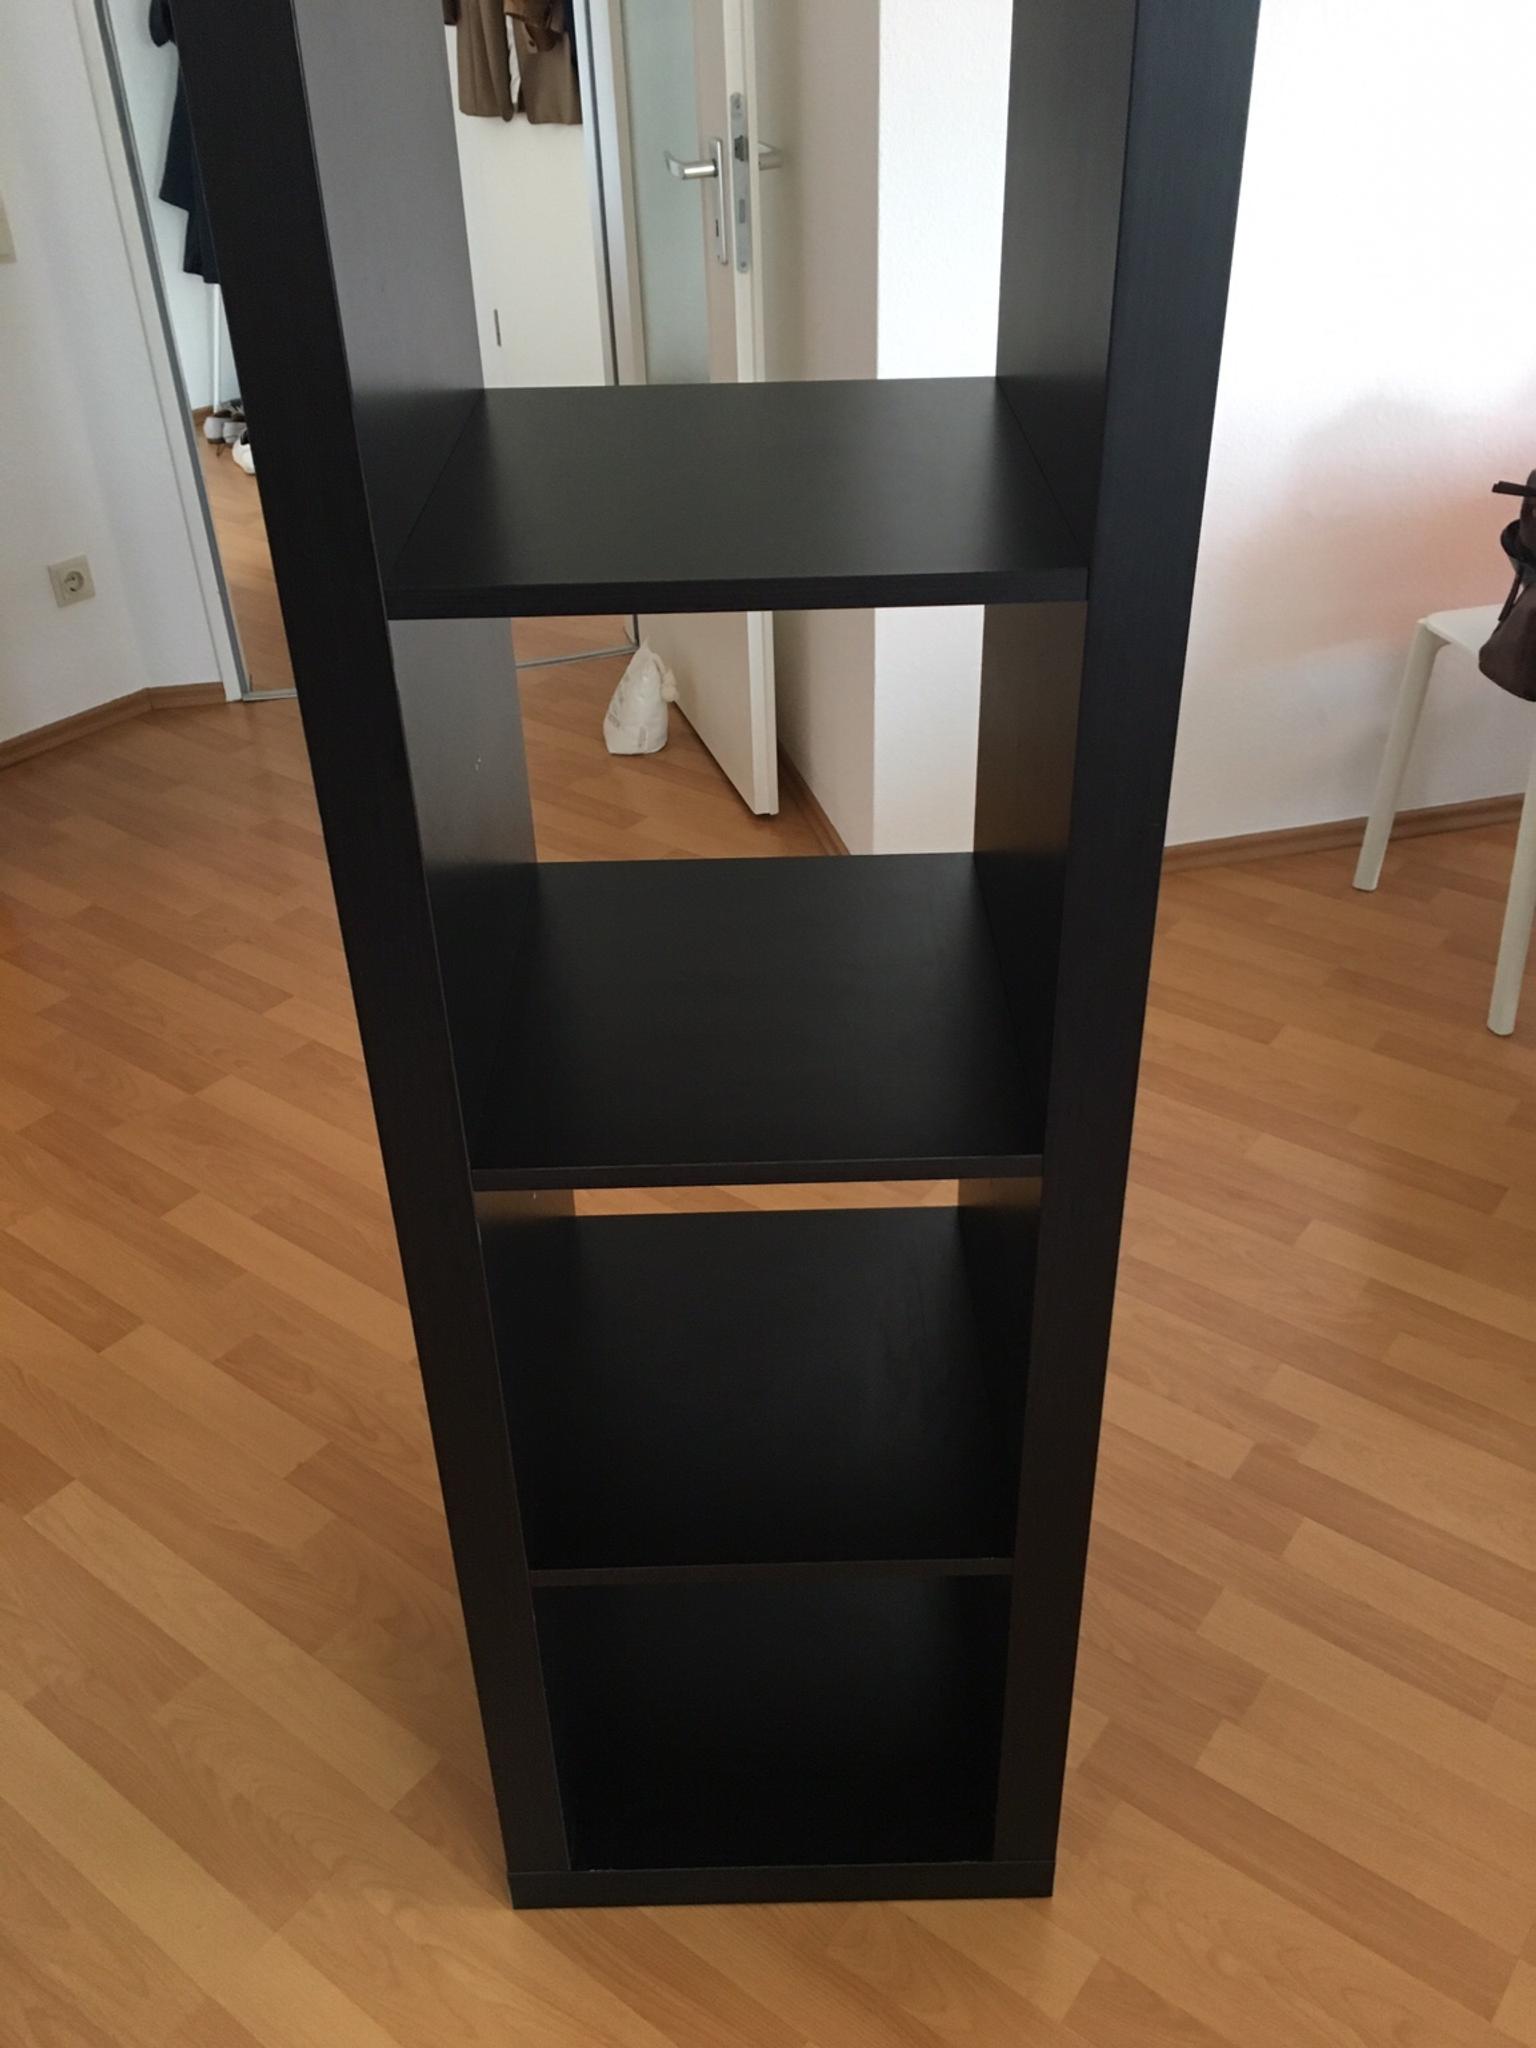 Schwarzes IKEA Holz Regal in 60486 Frankfurt am Main f r 12 00 zum  